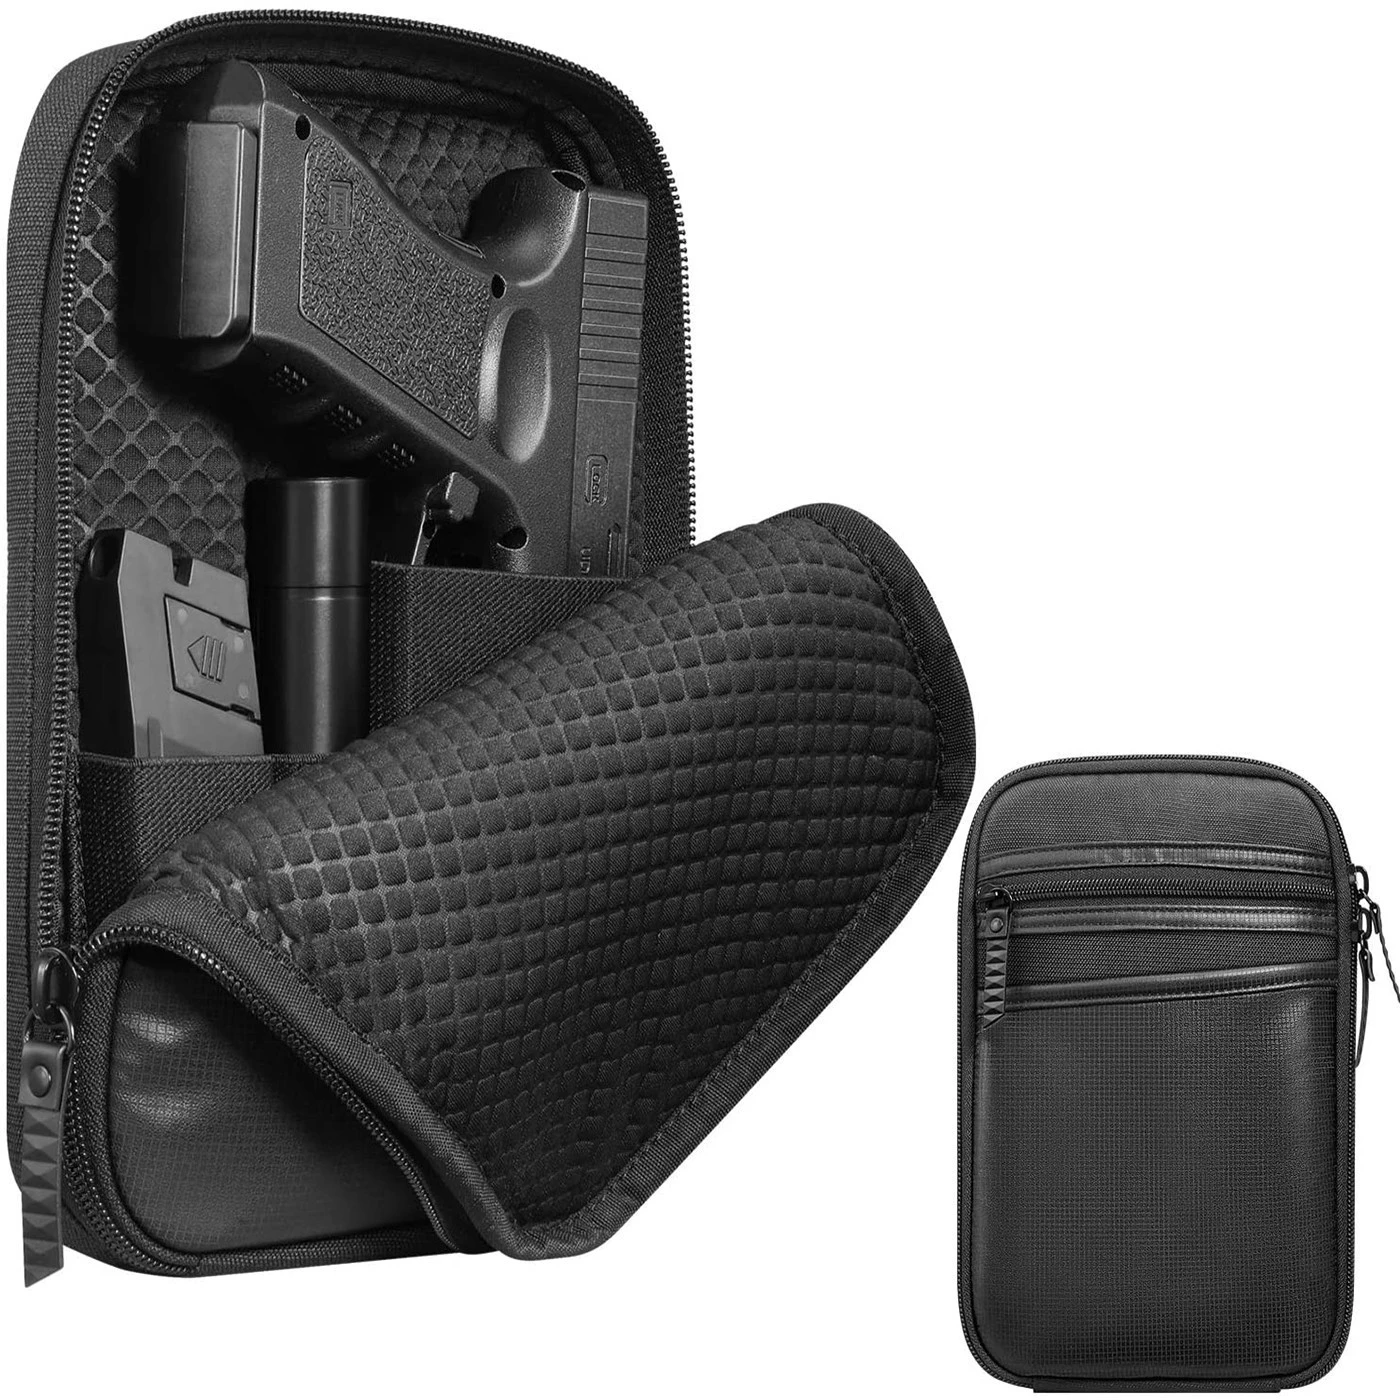 Outdoor Hunting Accessories Tactical Gun Airsoft Bag Hidden Pistol Holster Pouch